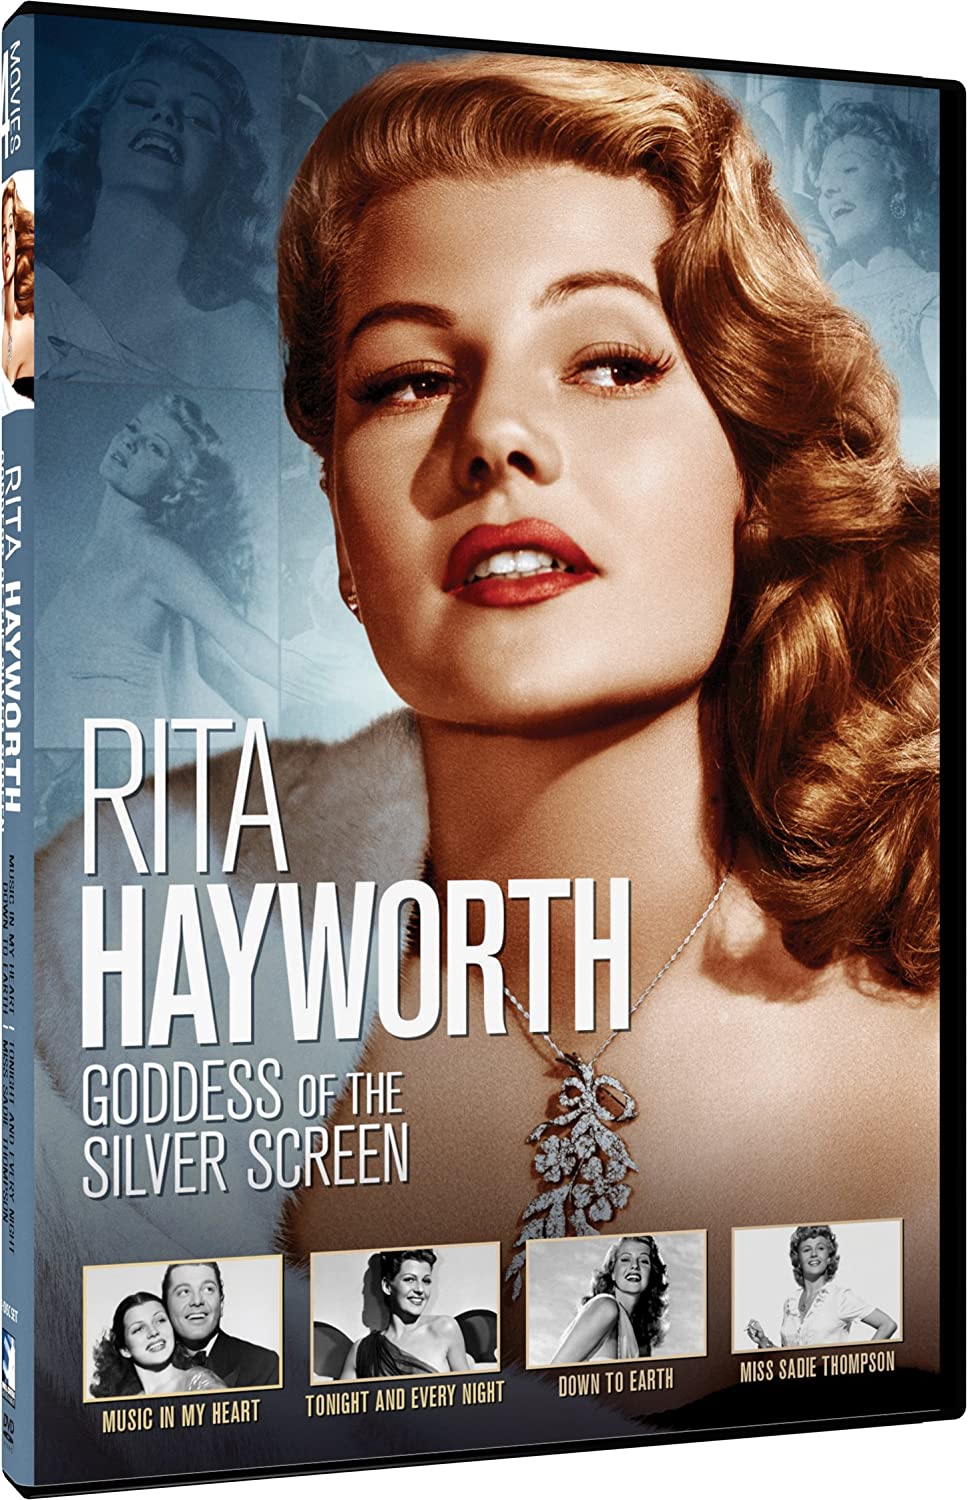 Mill Creek Goddess Of The Silver Screen - Rita Hayworth DVD